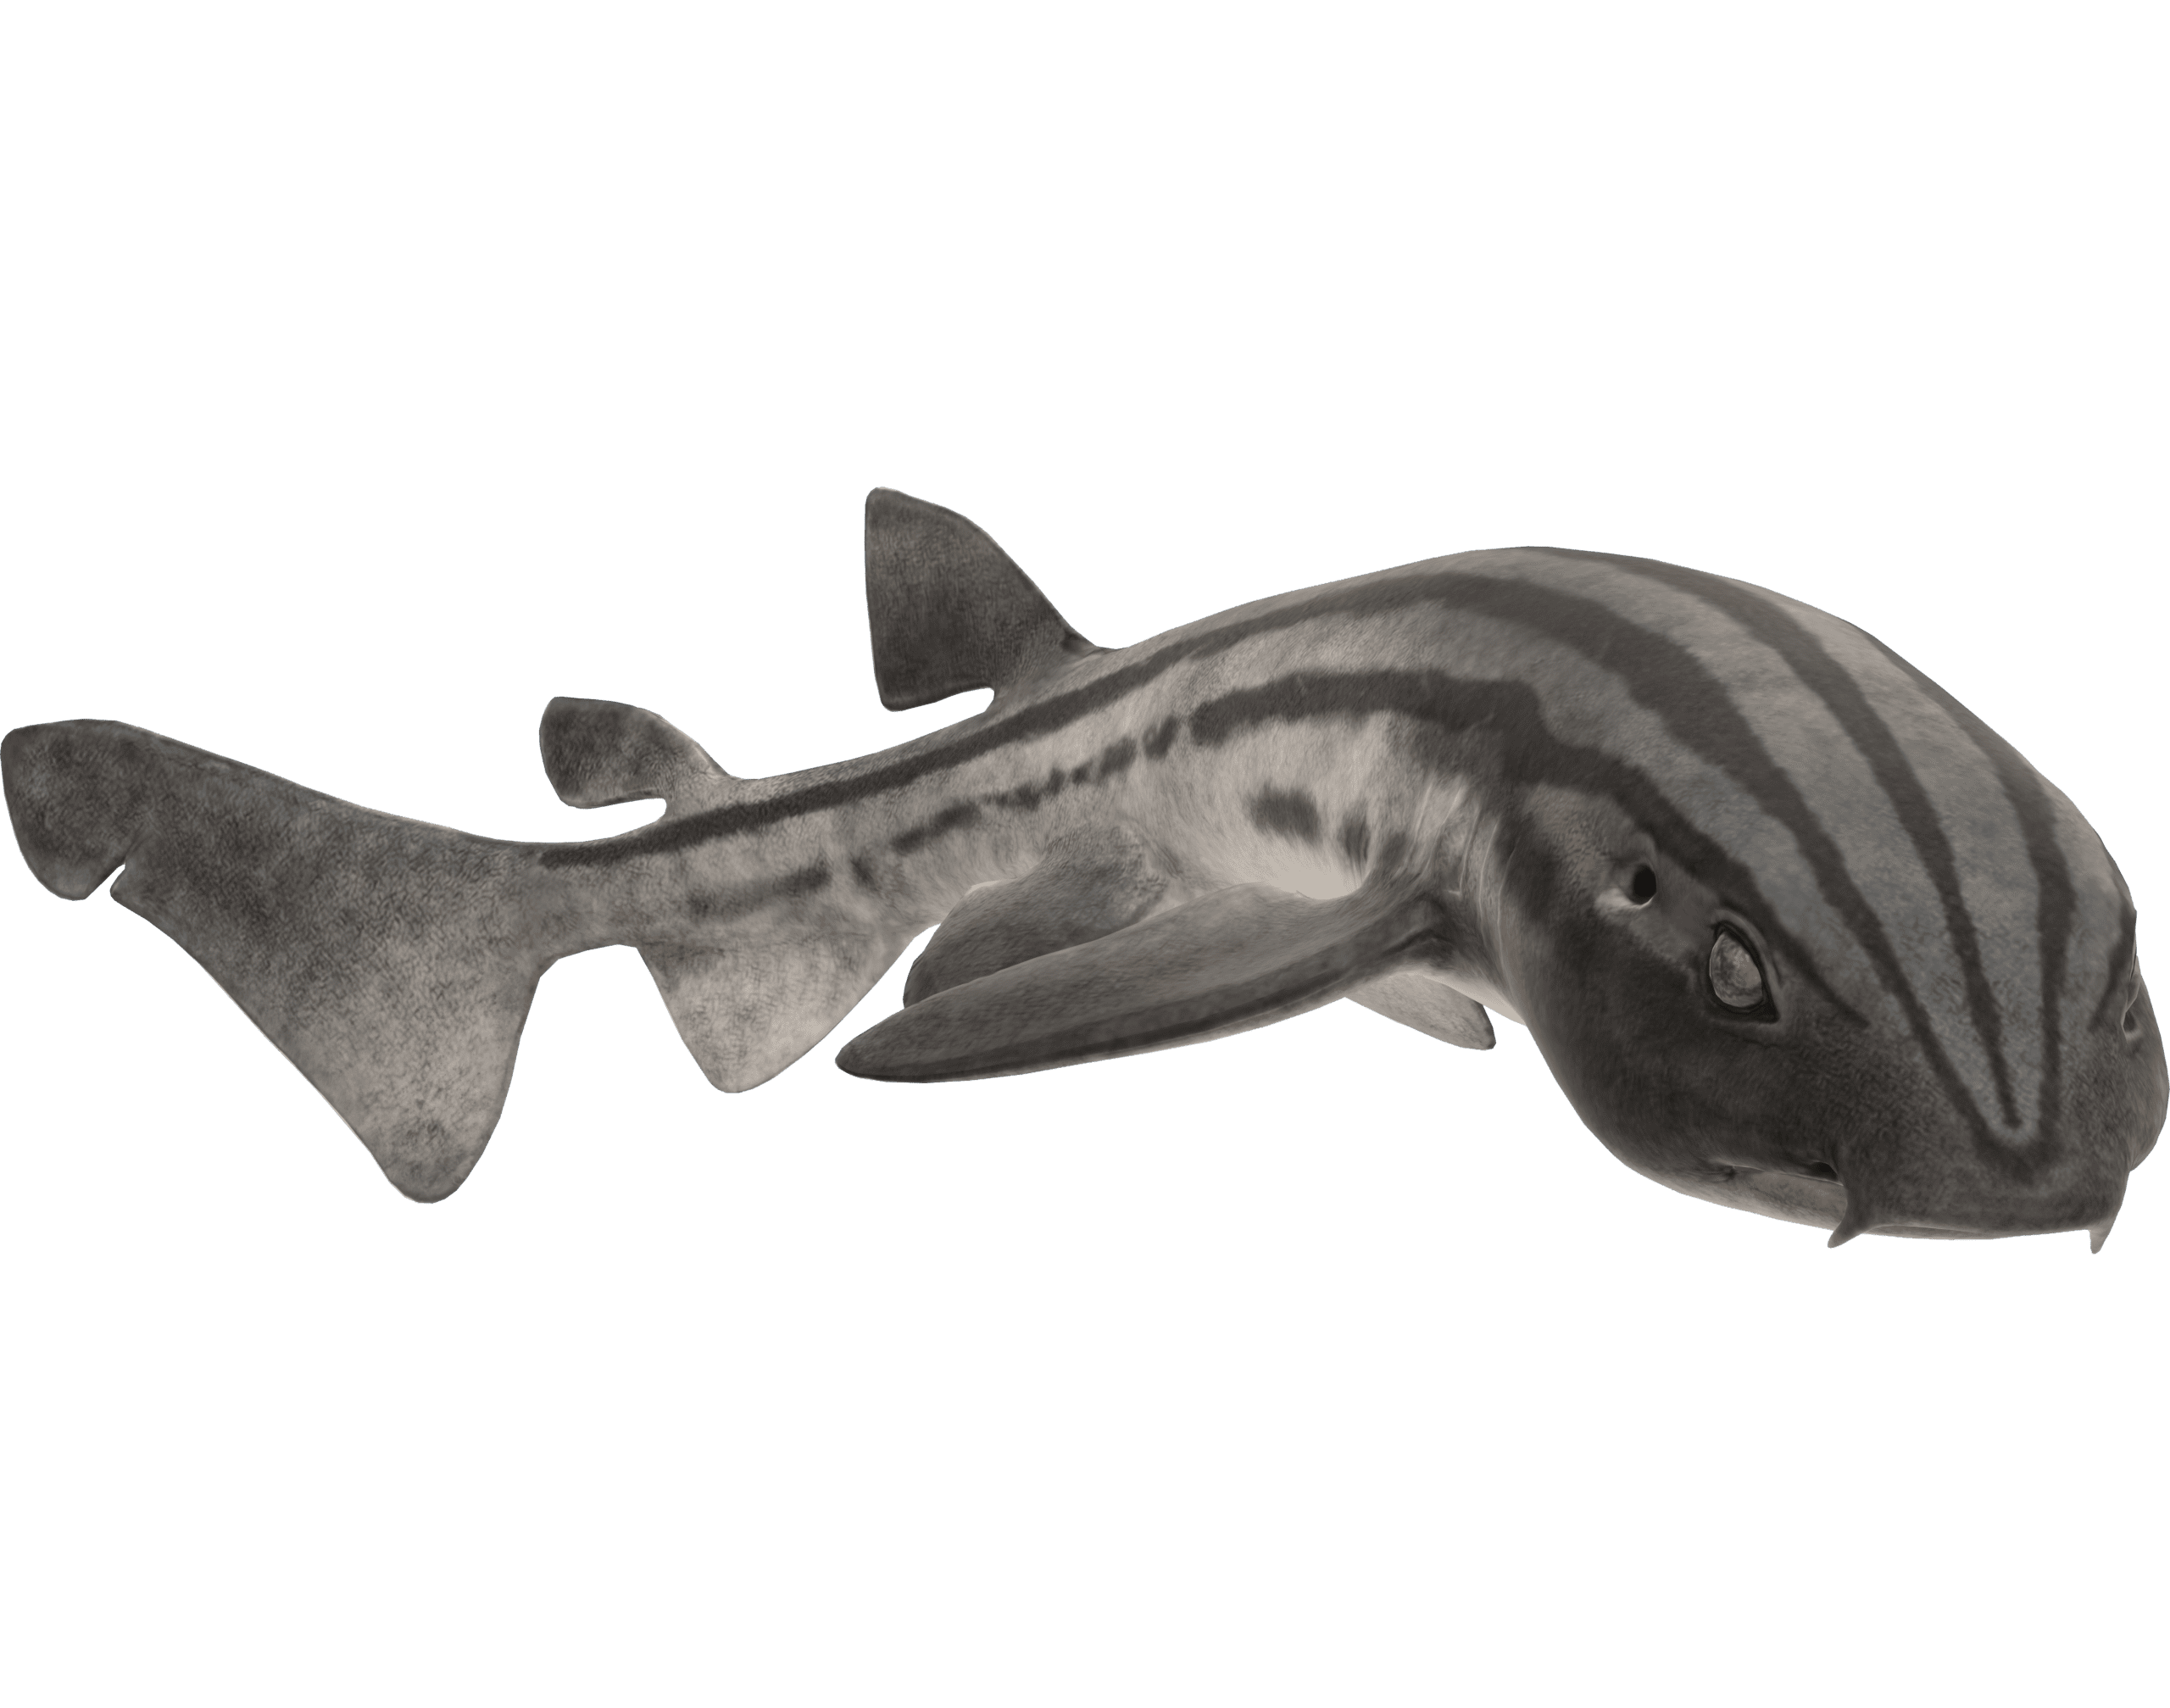 Pyjama shark (Poroderma africanum) | Shutterstock